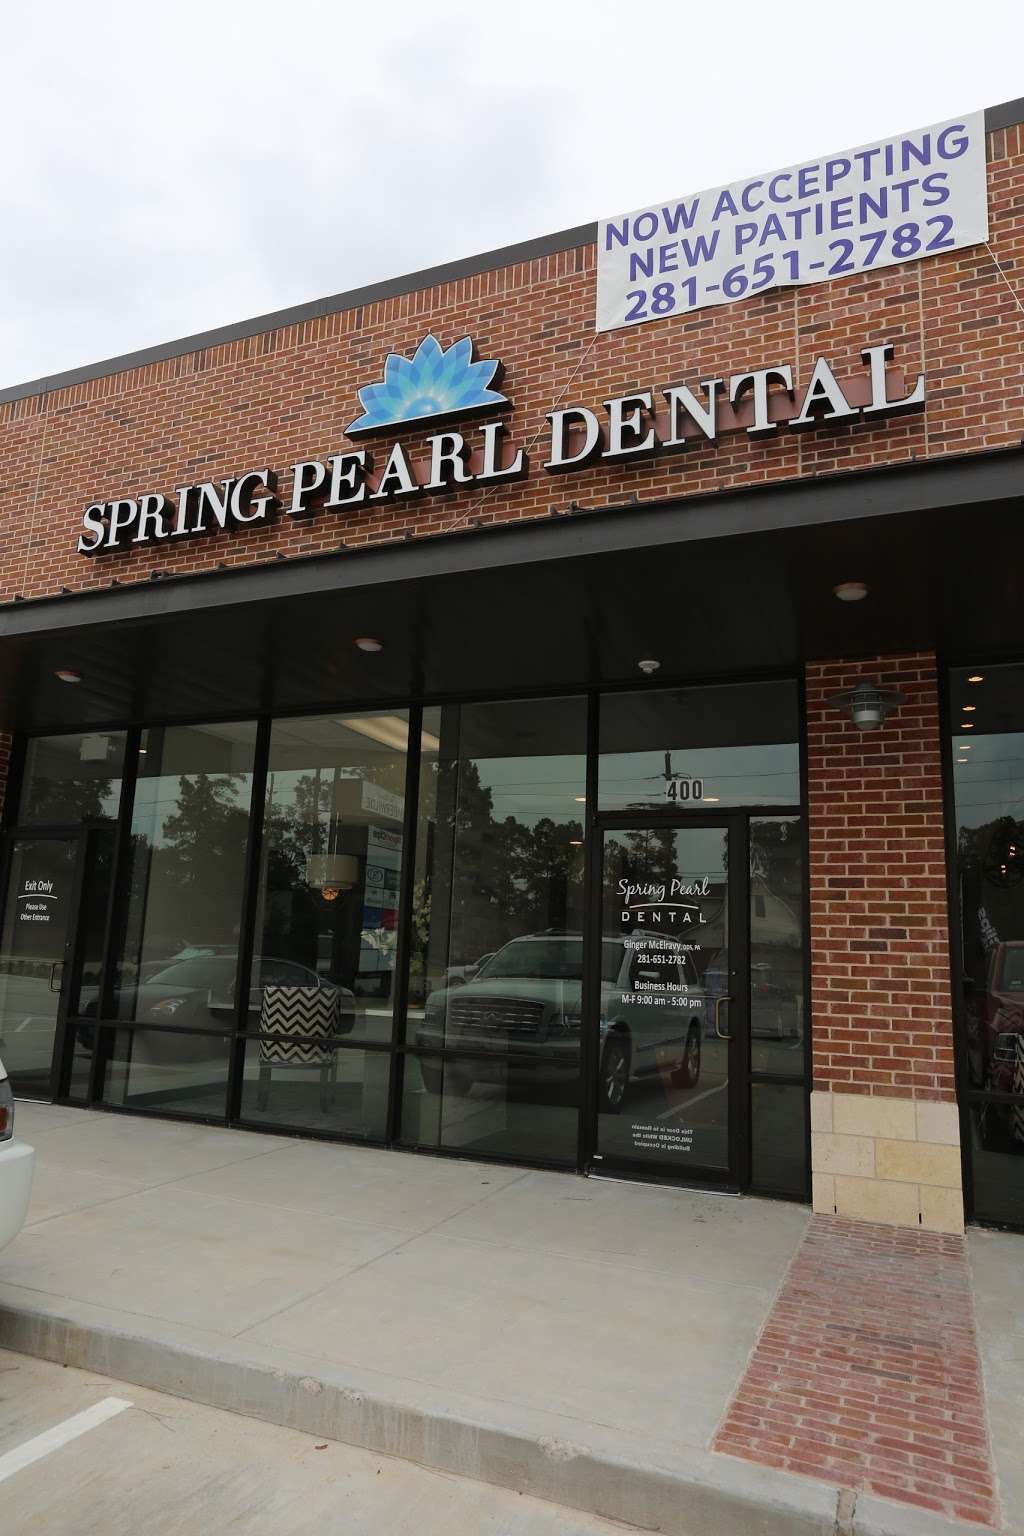 Spring Pearl Dental | 3210, 24504 Kuykendahl Rd #400, Tomball, TX 77375, USA | Phone: (281) 651-2782